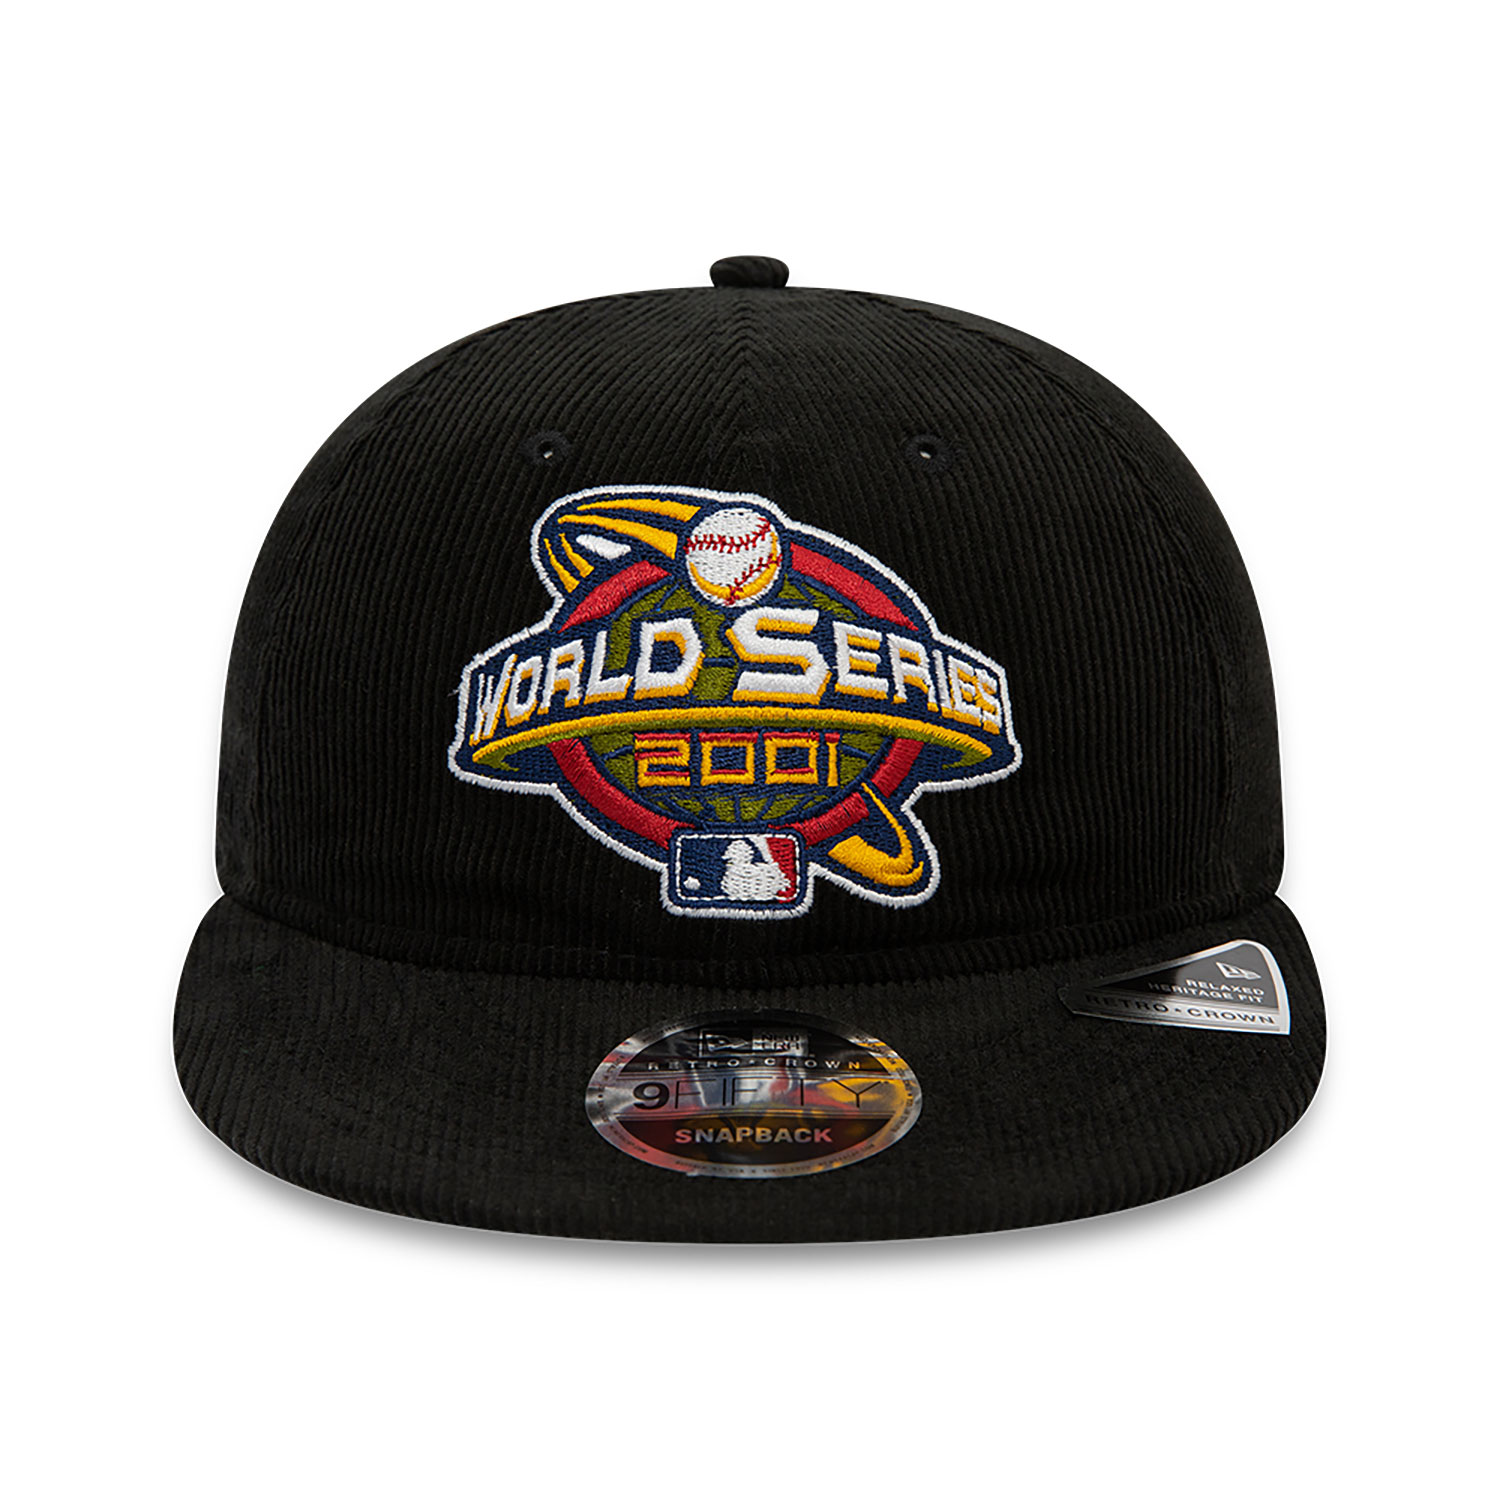 MLB World Series 2001 Patch Black Retro Crown 9FIFTY Snapback Cap